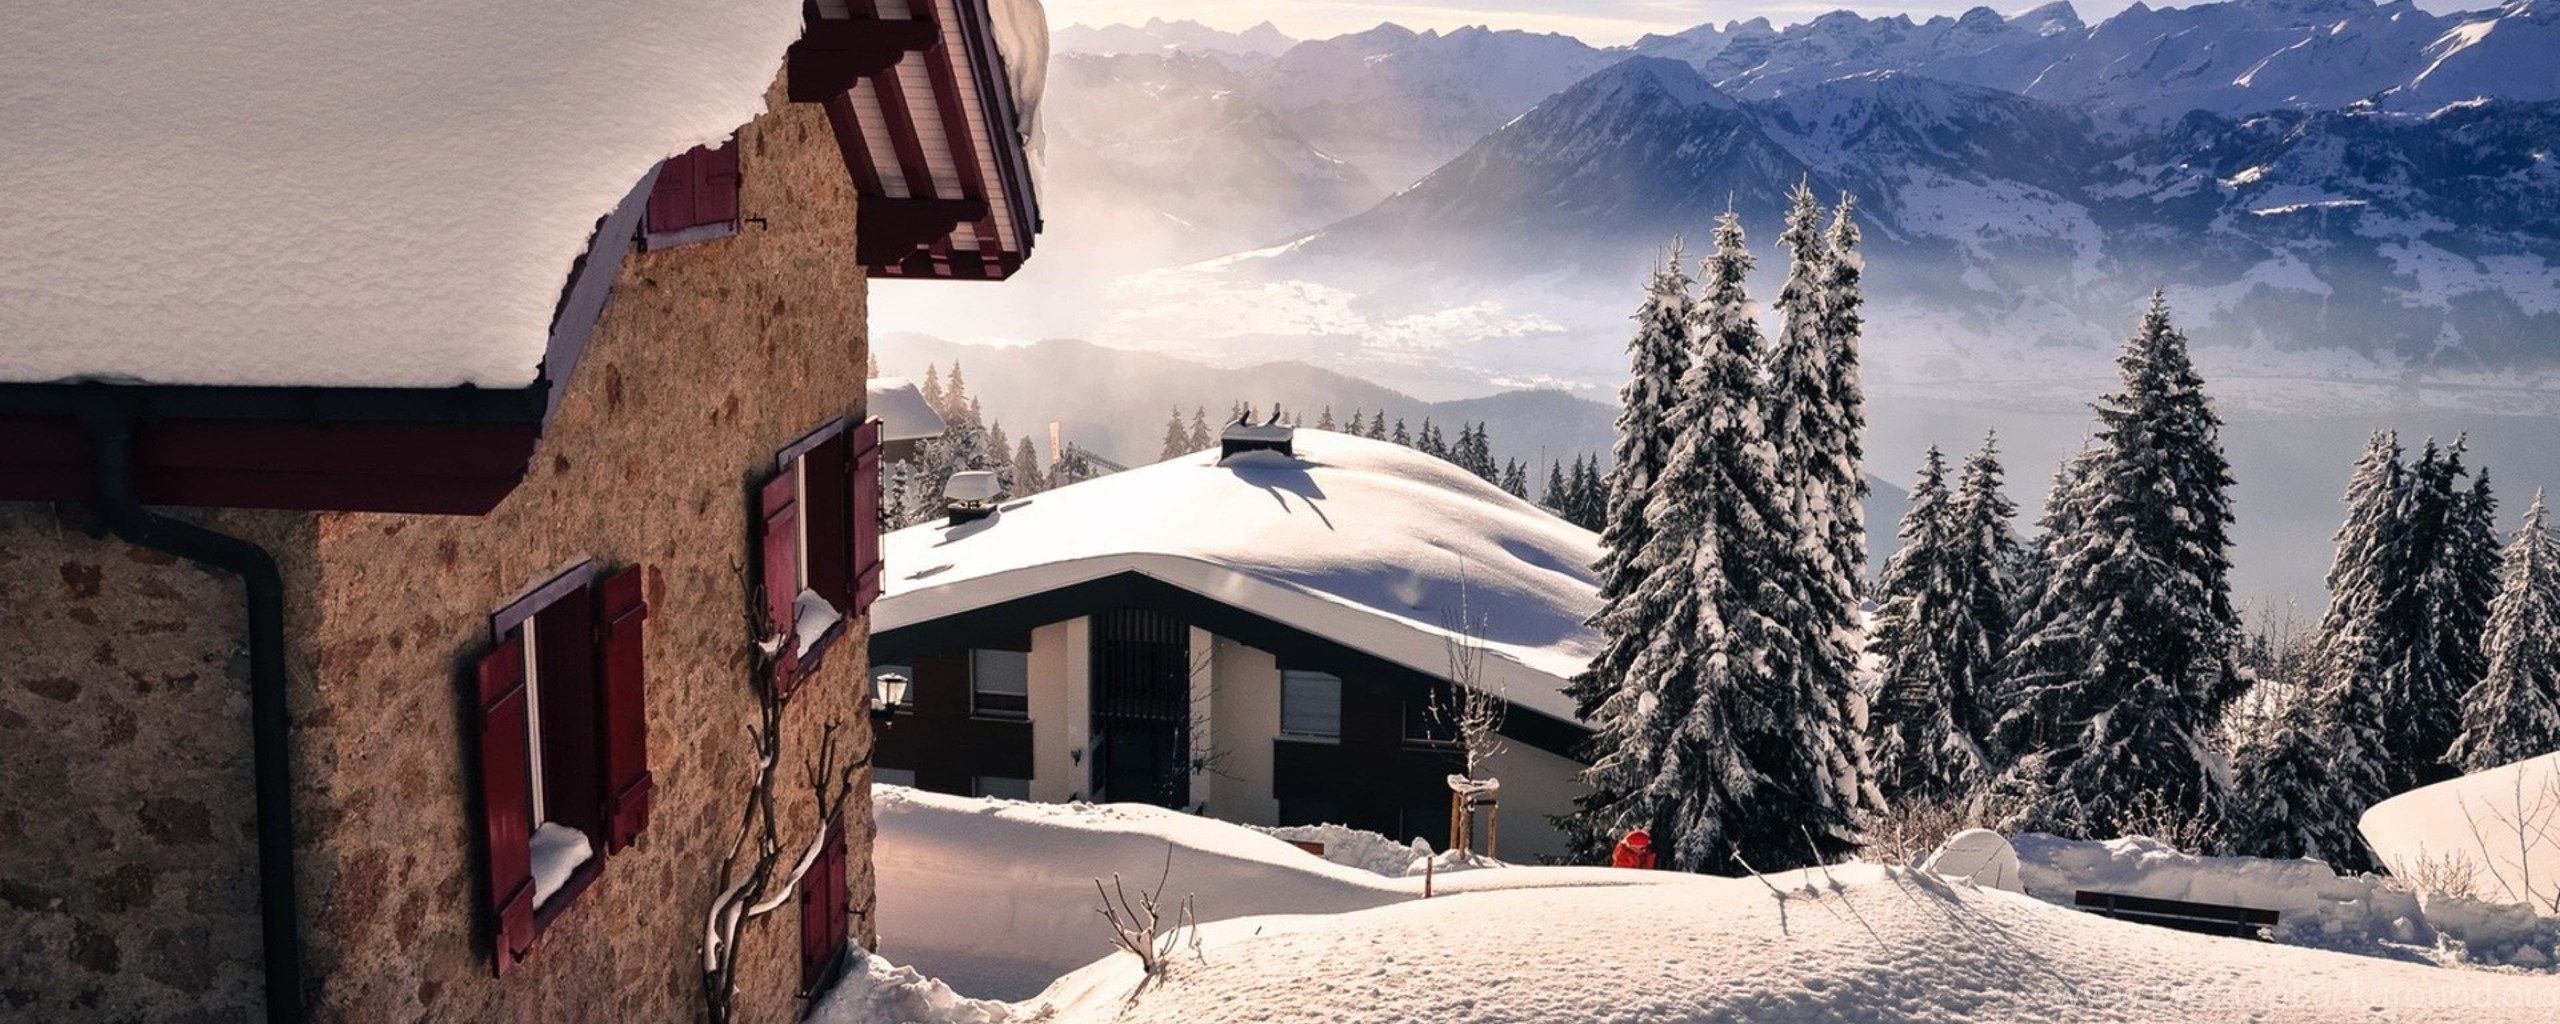 Download Wallpaper 3840x2160 Snow, Mountains, Winter, Landscape 4K. Desktop Background